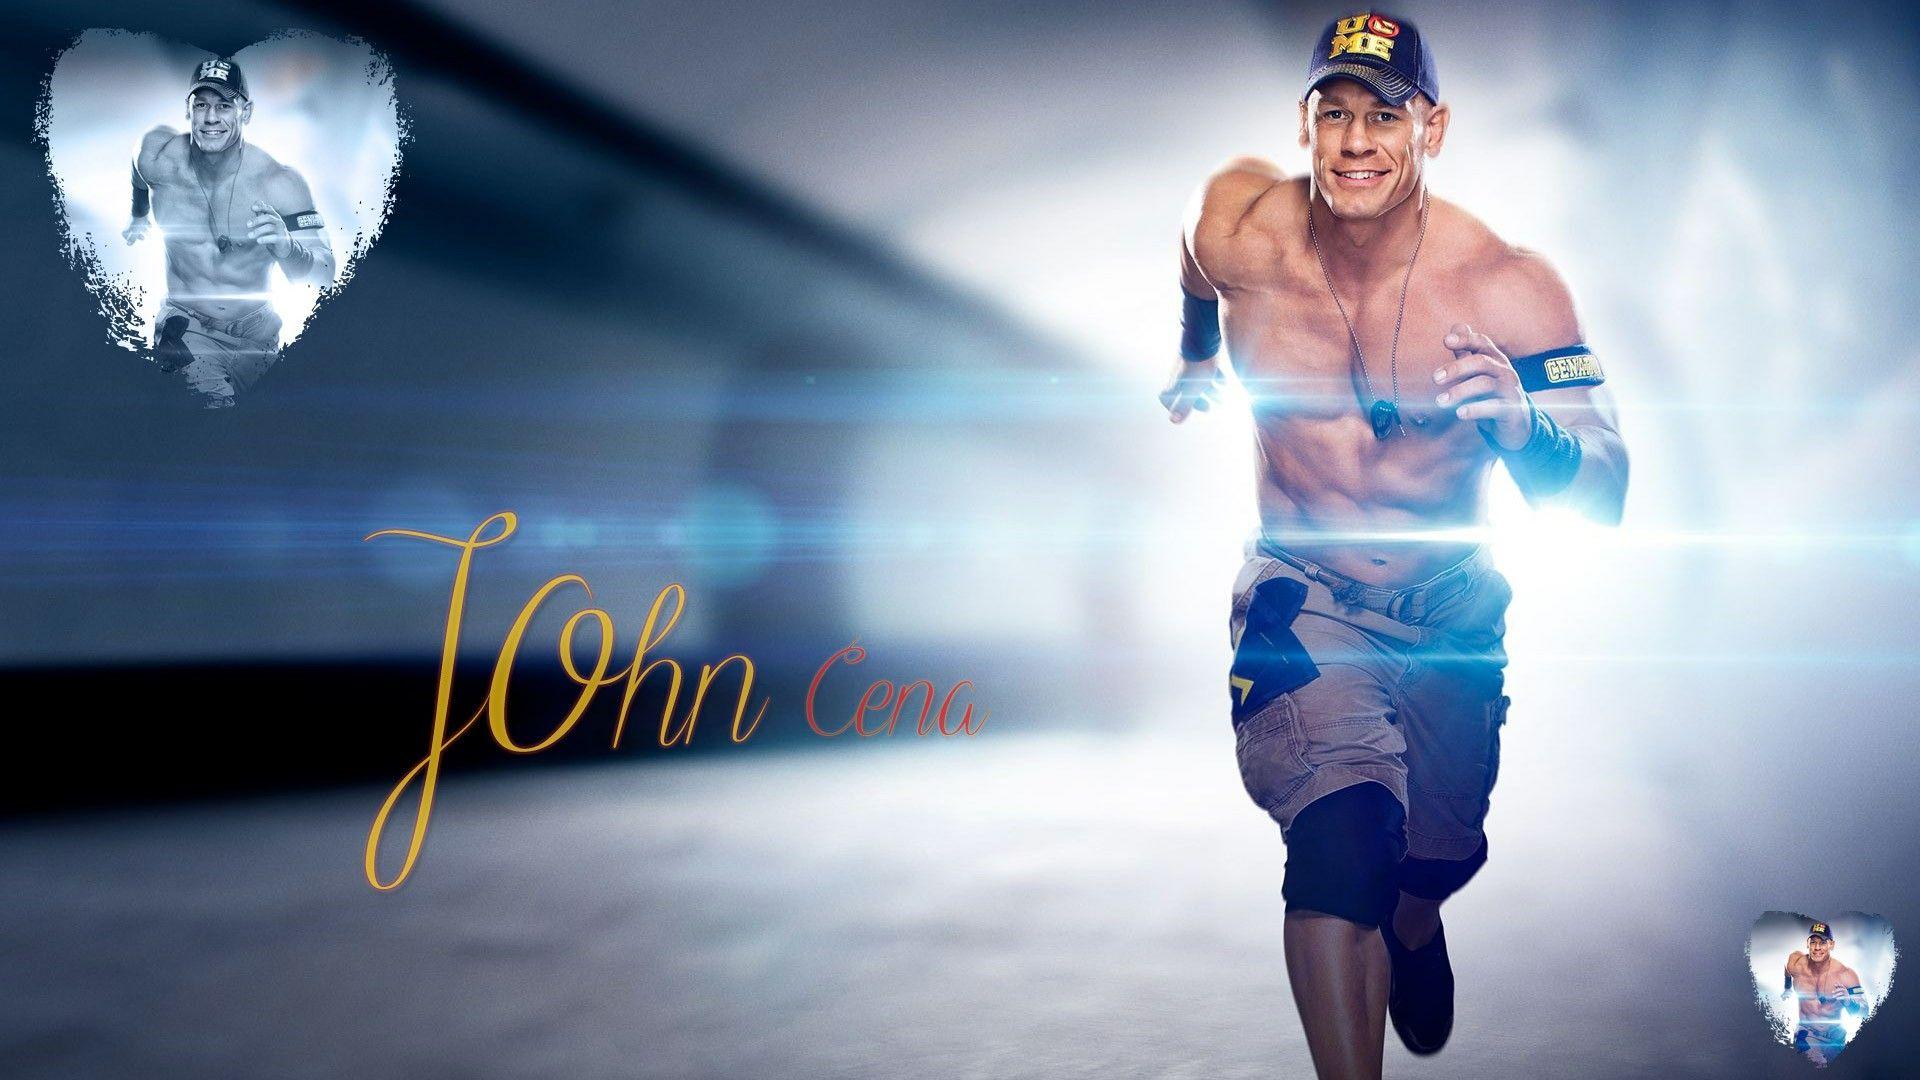 John Cena Full HD Wallpaper 1920x1080